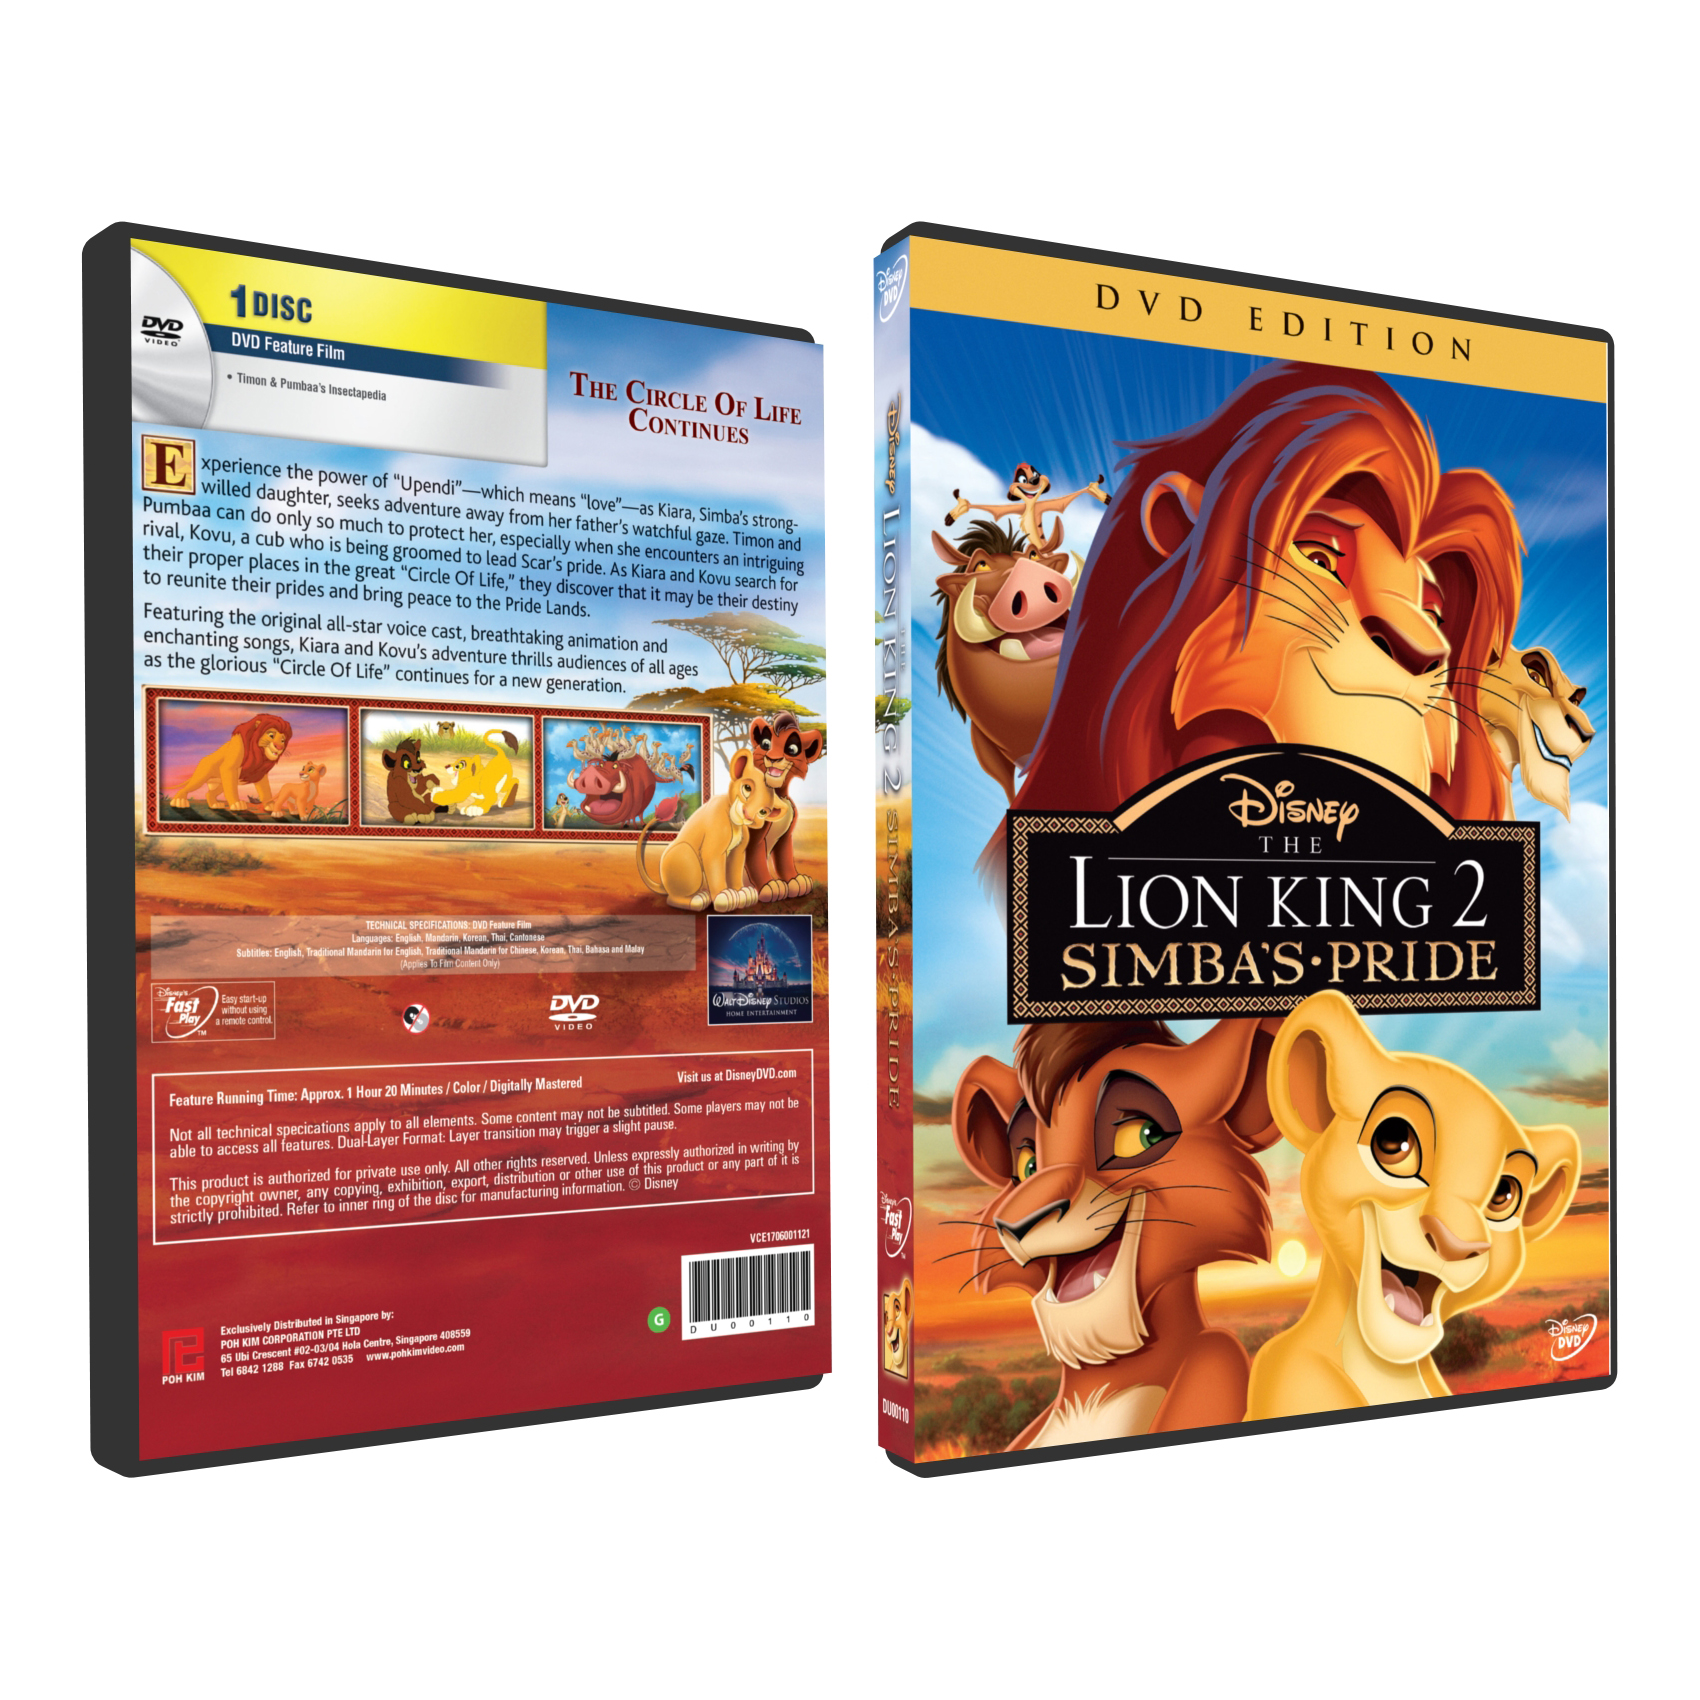 The Lion King 2: Simba's Pride (DVD Feature Film + Bonus) - Poh Kim Video